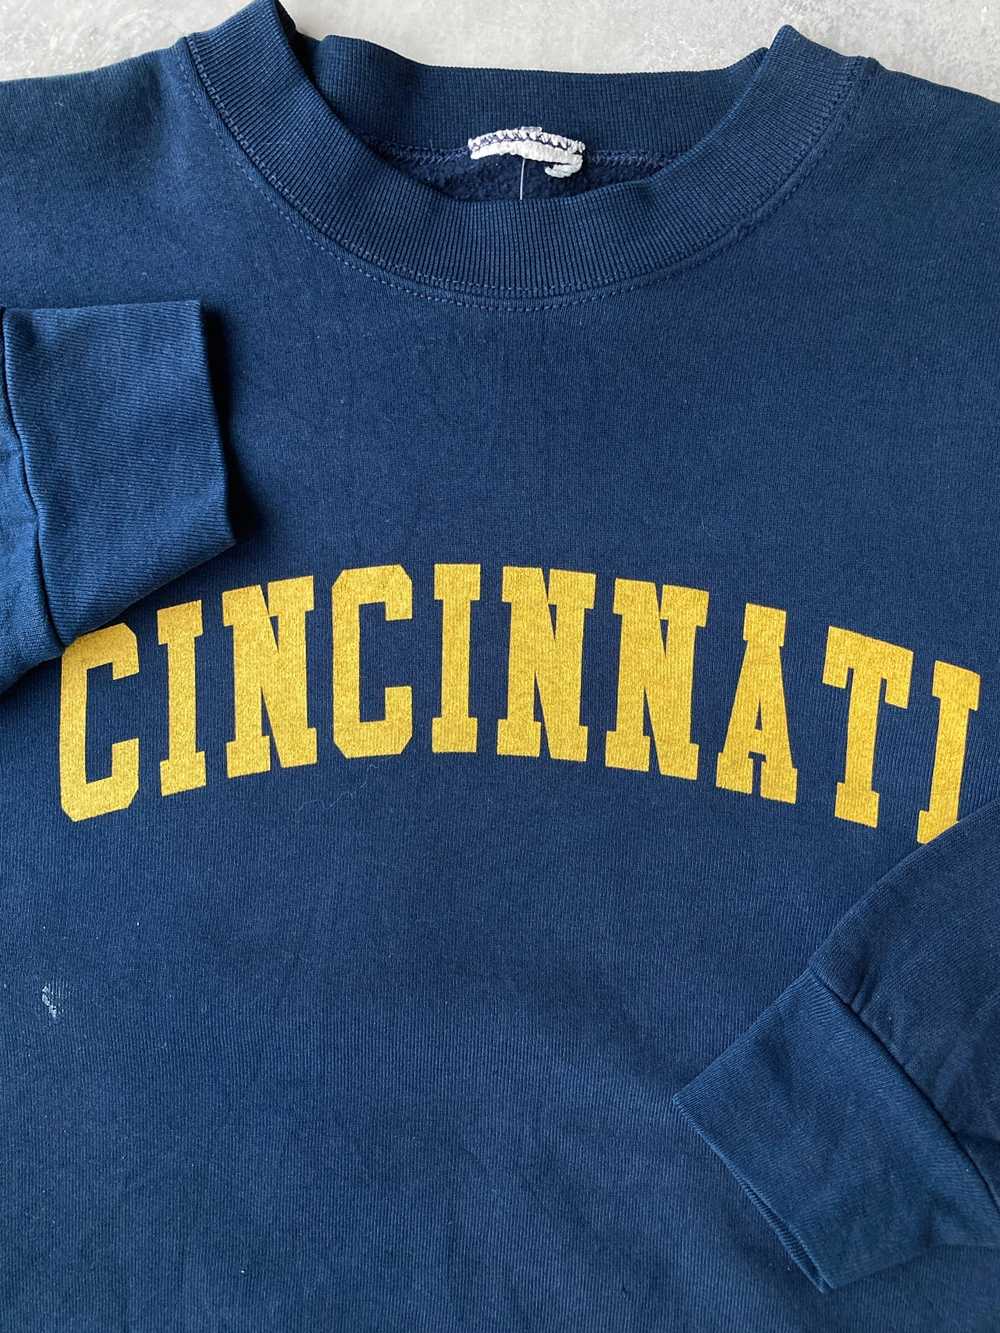 Cincinnati Sweatshirt 90's - XL - image 4